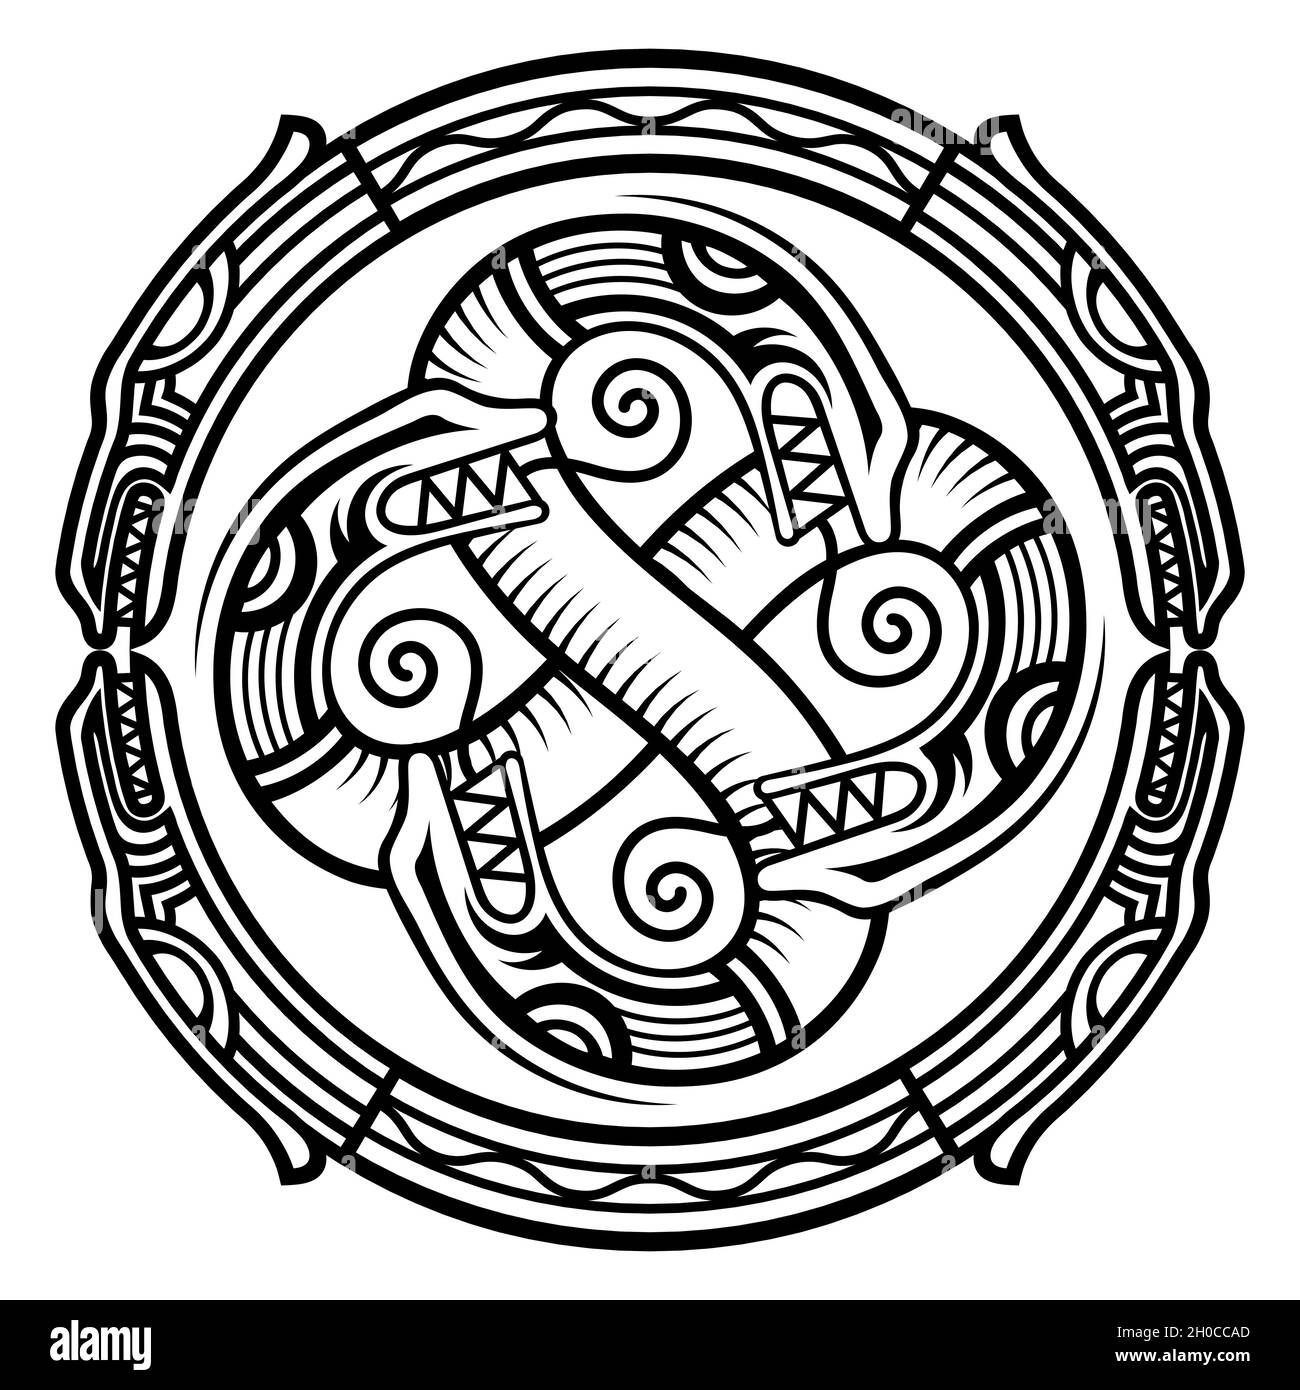 celtic knot dragons